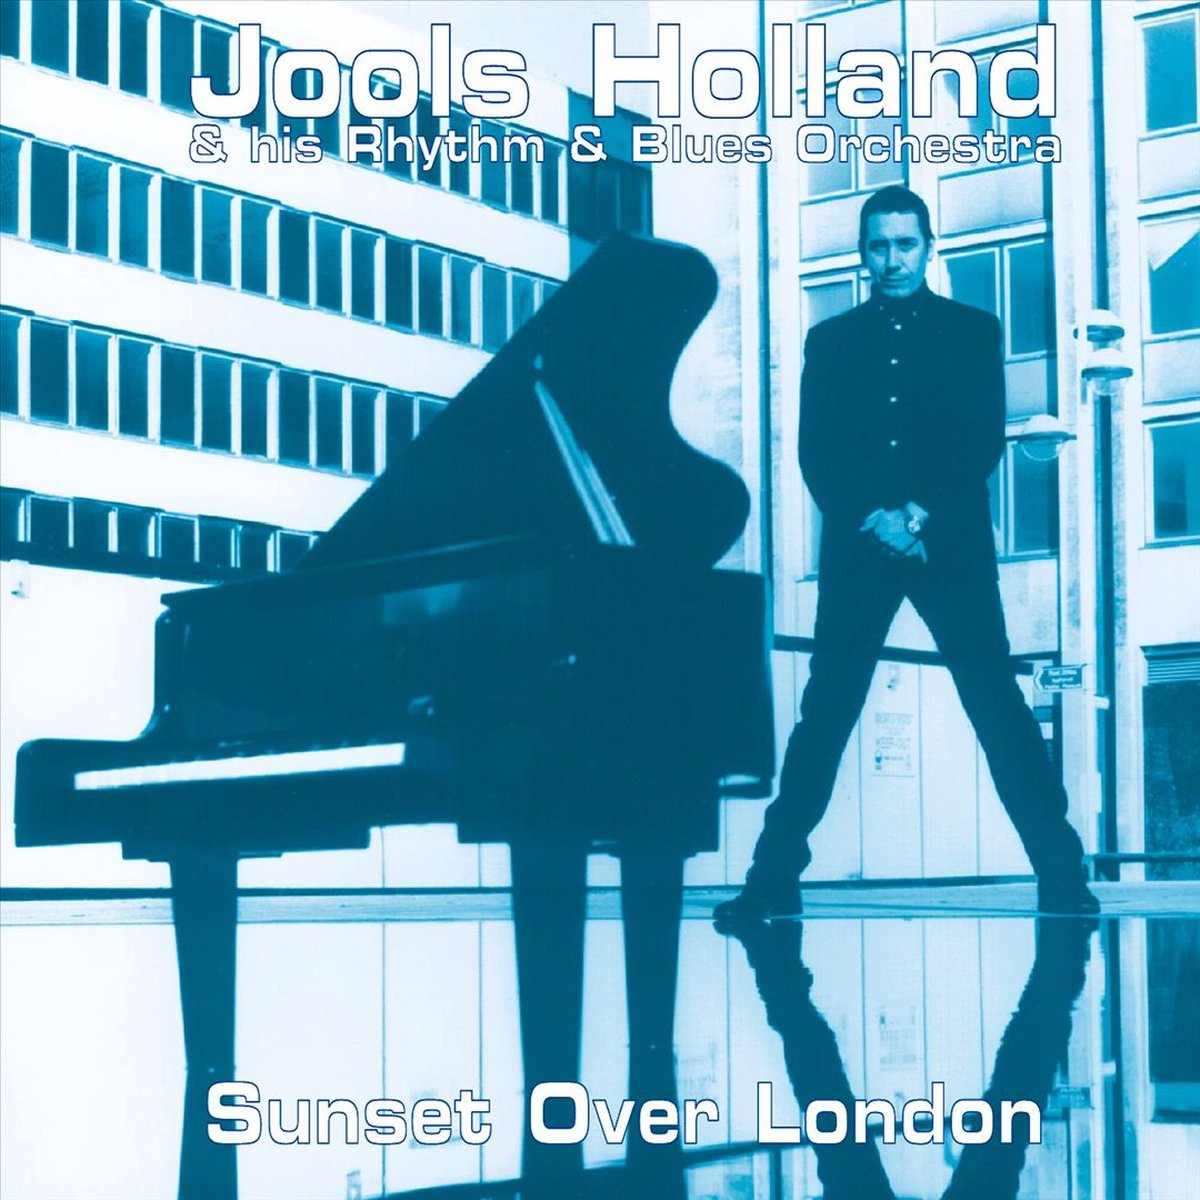 Sunset Over London - Jools Holland & His Rhythm & Blues Orchestra